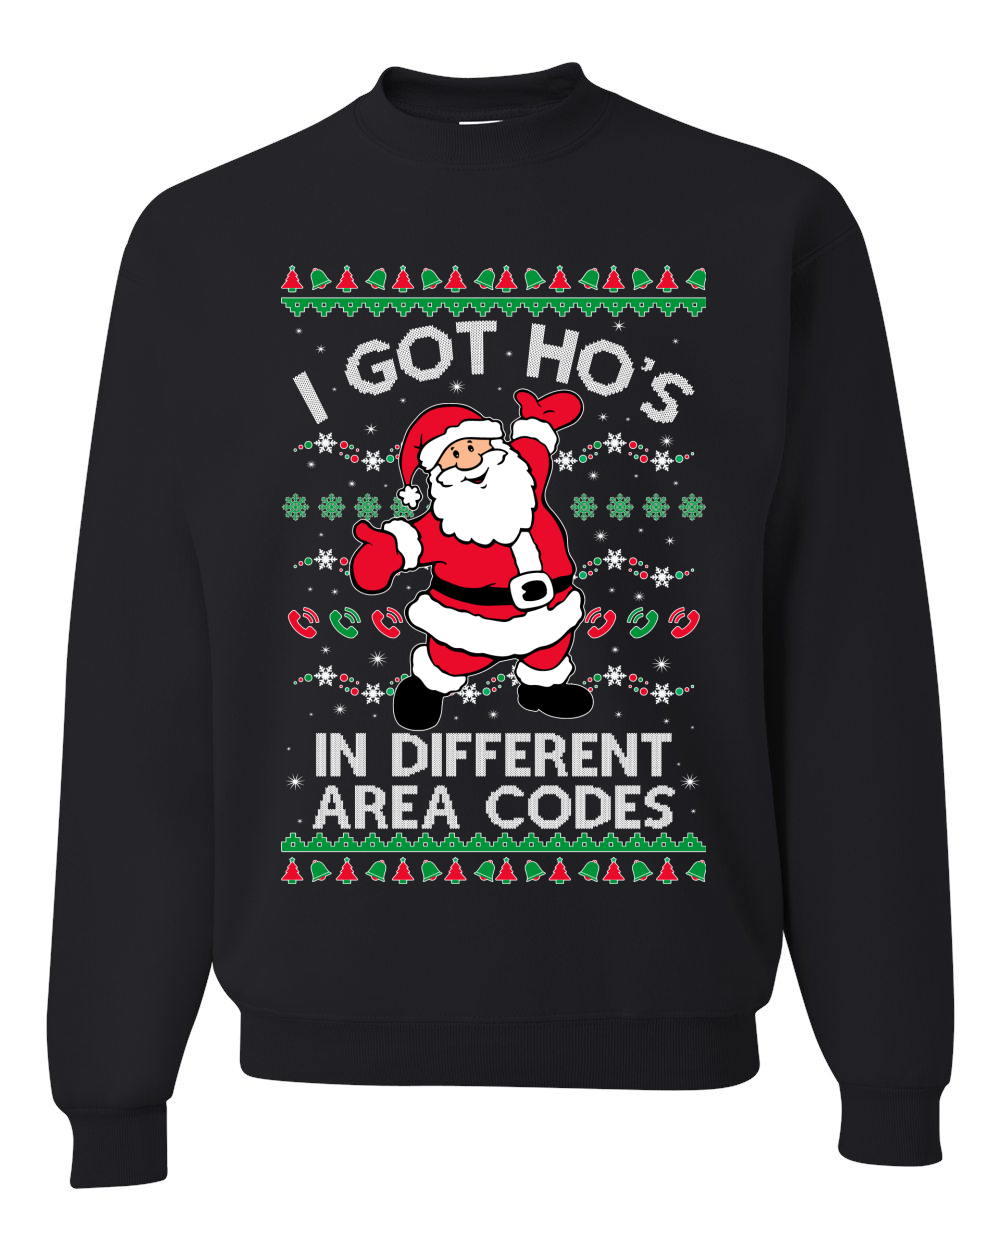 Naughty Santa Claus Ho Ho Ho Xmas Ugly Christmas Sweater Unisex Sweatshirt  | eBay